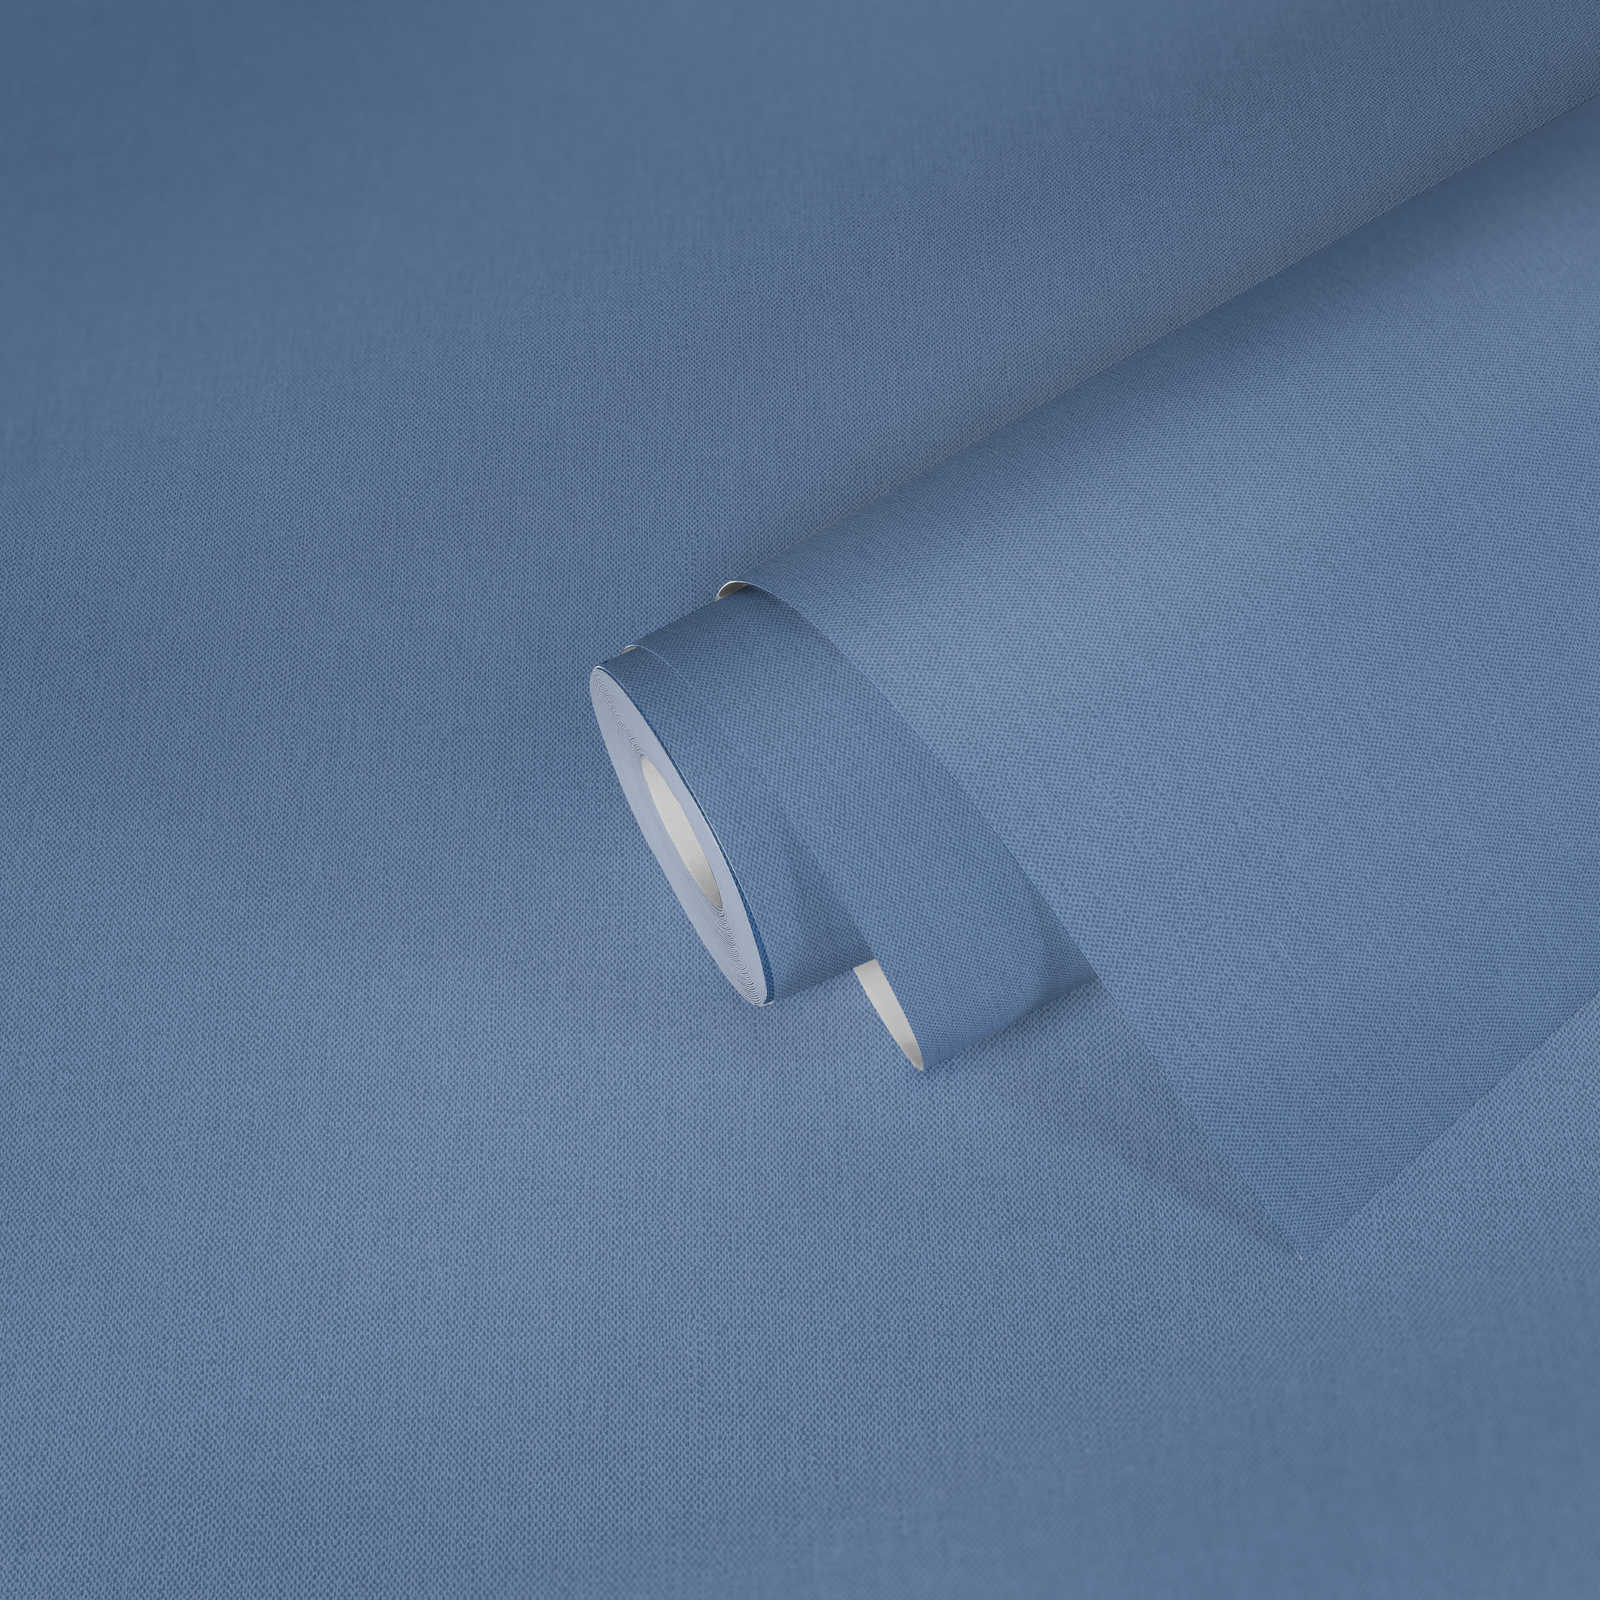             Tapete Himmelblau einfarbig, Textilstruktur & meliertem Effekt – Blau
        